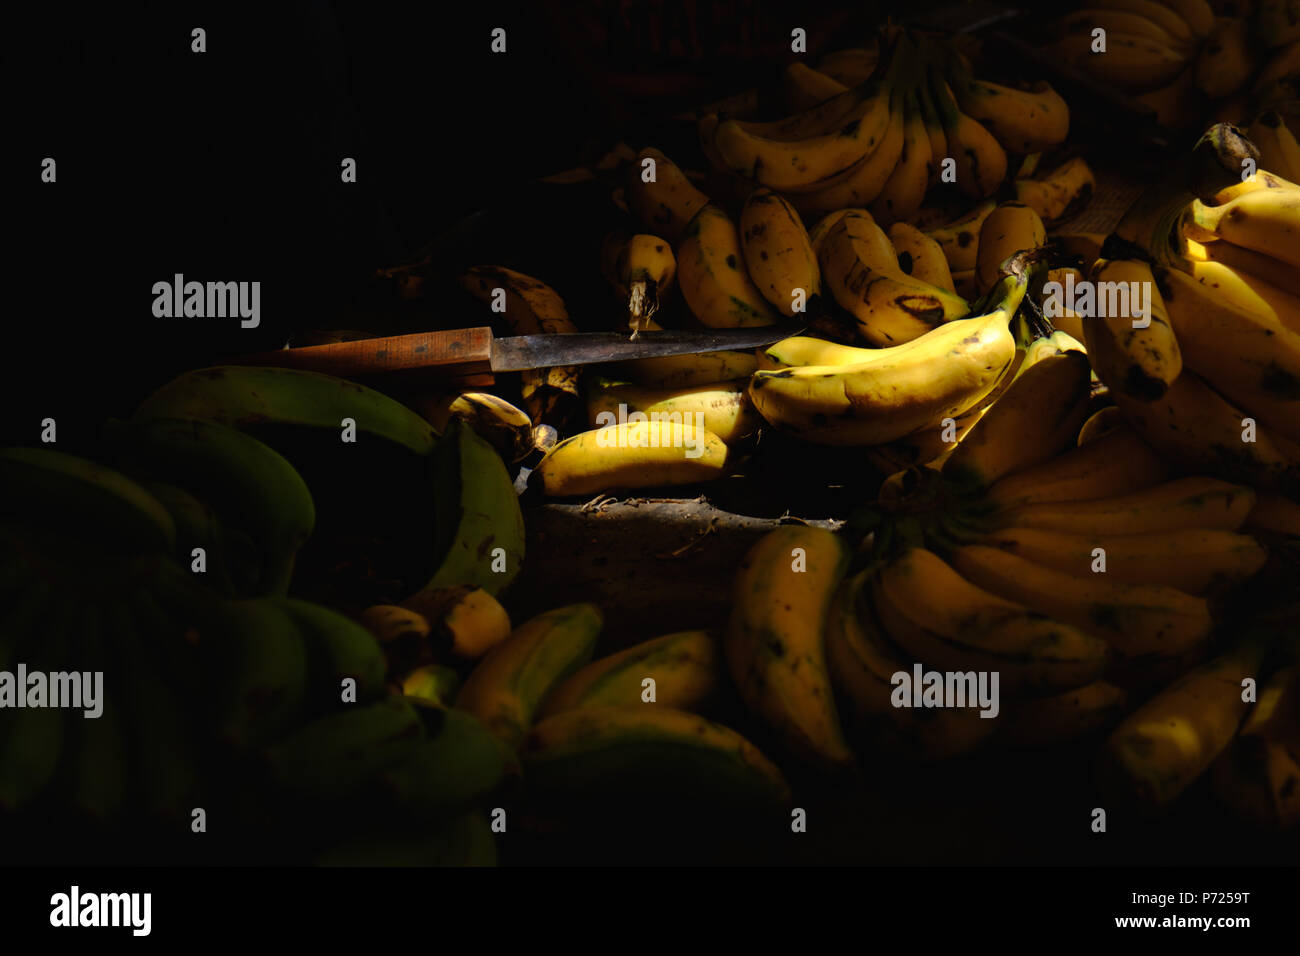 Big mûres bananes vertes et jaunes sur market stall Banque D'Images